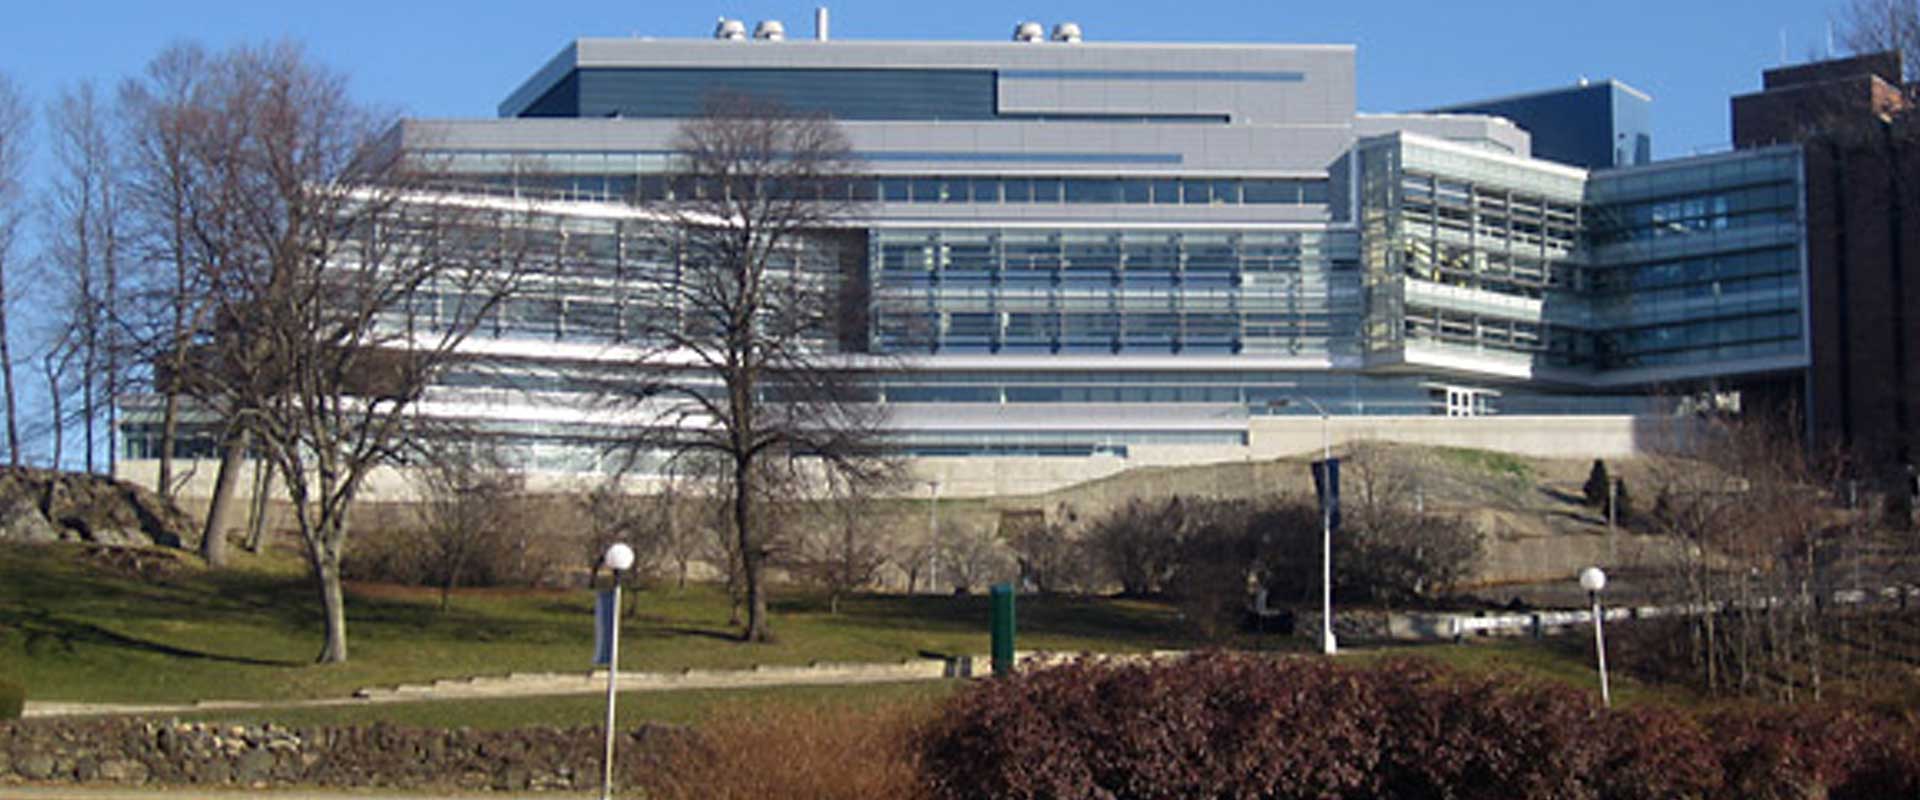 Brandeis University Carl J. Shapiro Science Center